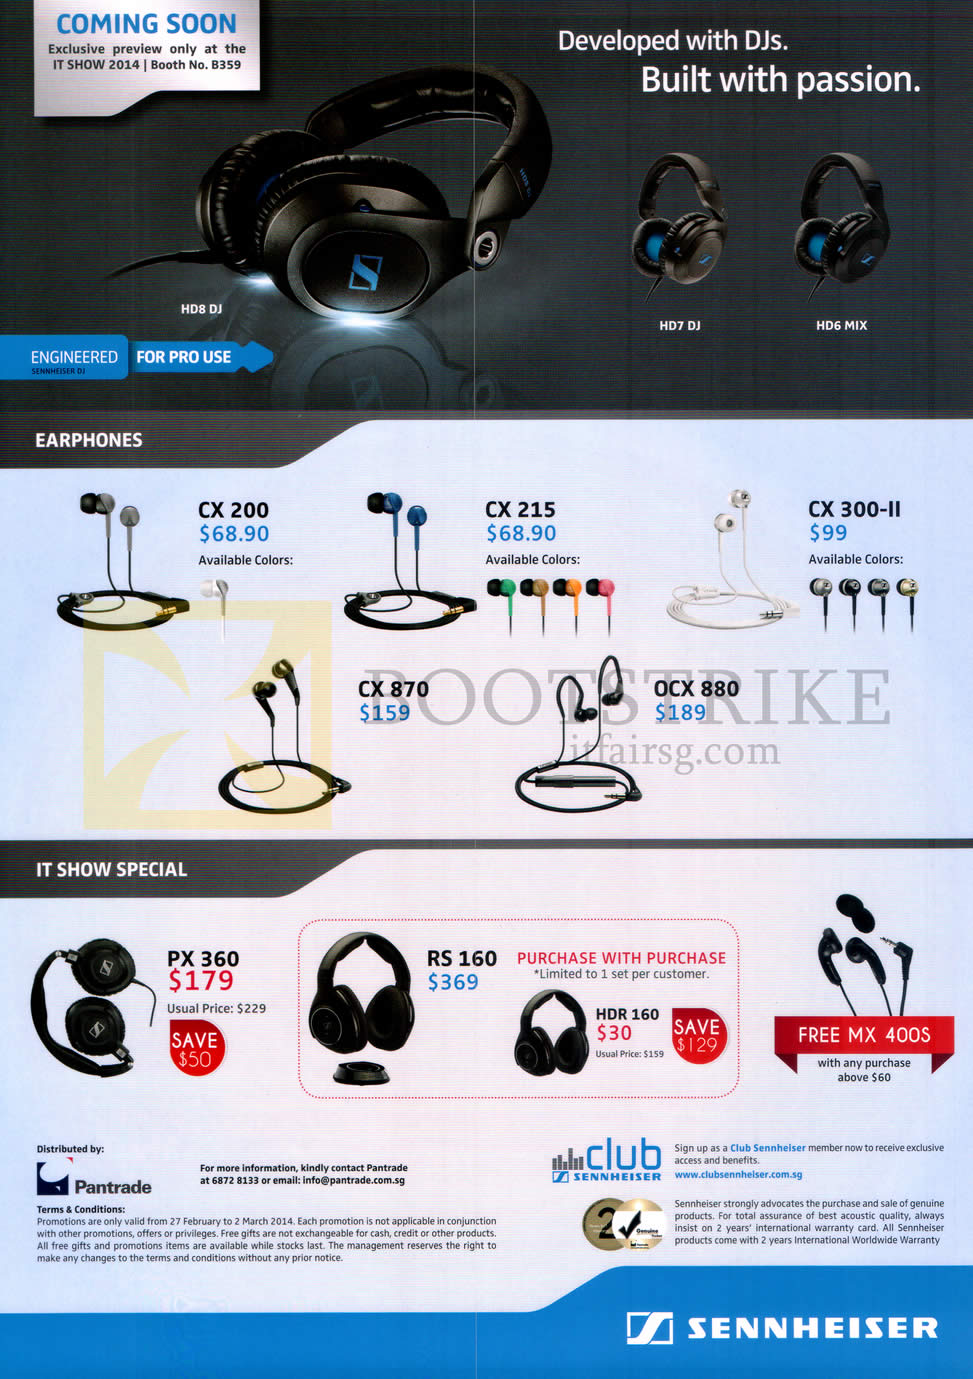 IT SHOW 2014 price list image brochure of Sennheiser Earphones, Headphone, Pan Trade, CX200, CX215, CX 300-II, CX870, OCX 880, PX 360, RS 160, HDR 160, MX 4005